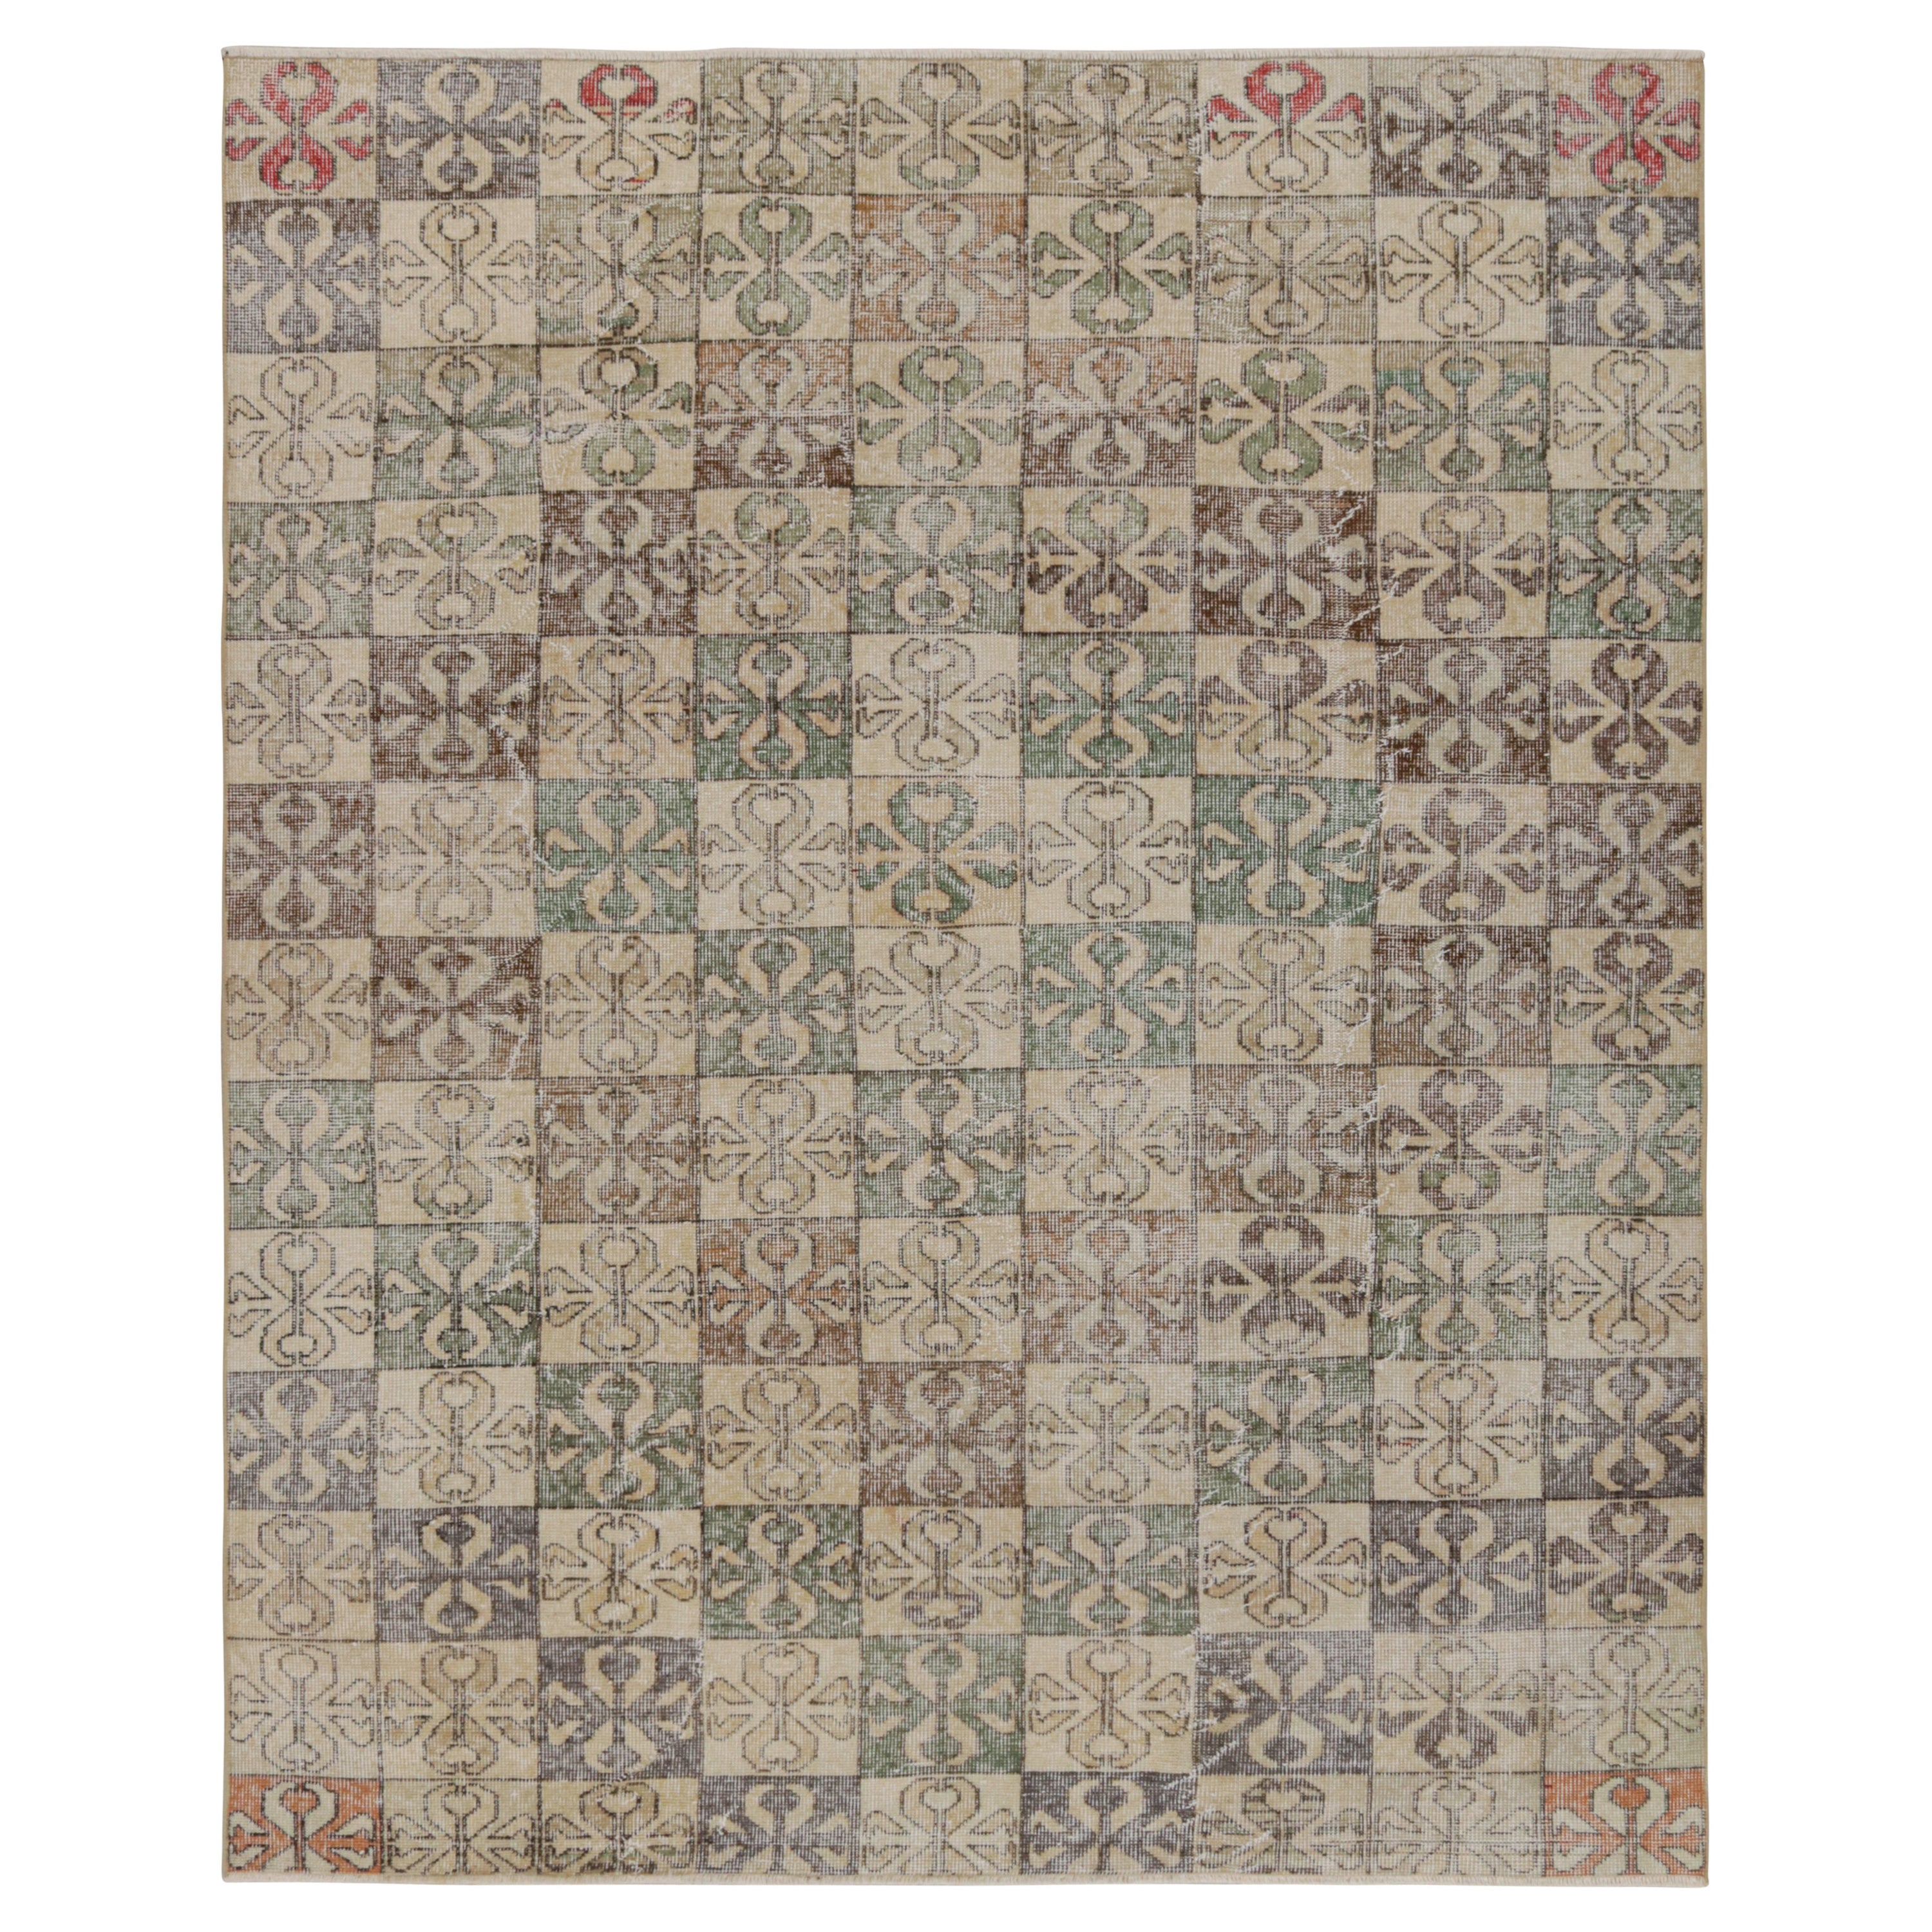 Vintage Zeki Müren Rug, with Polychromatic Geometric patterns, from Rug & Kilim For Sale